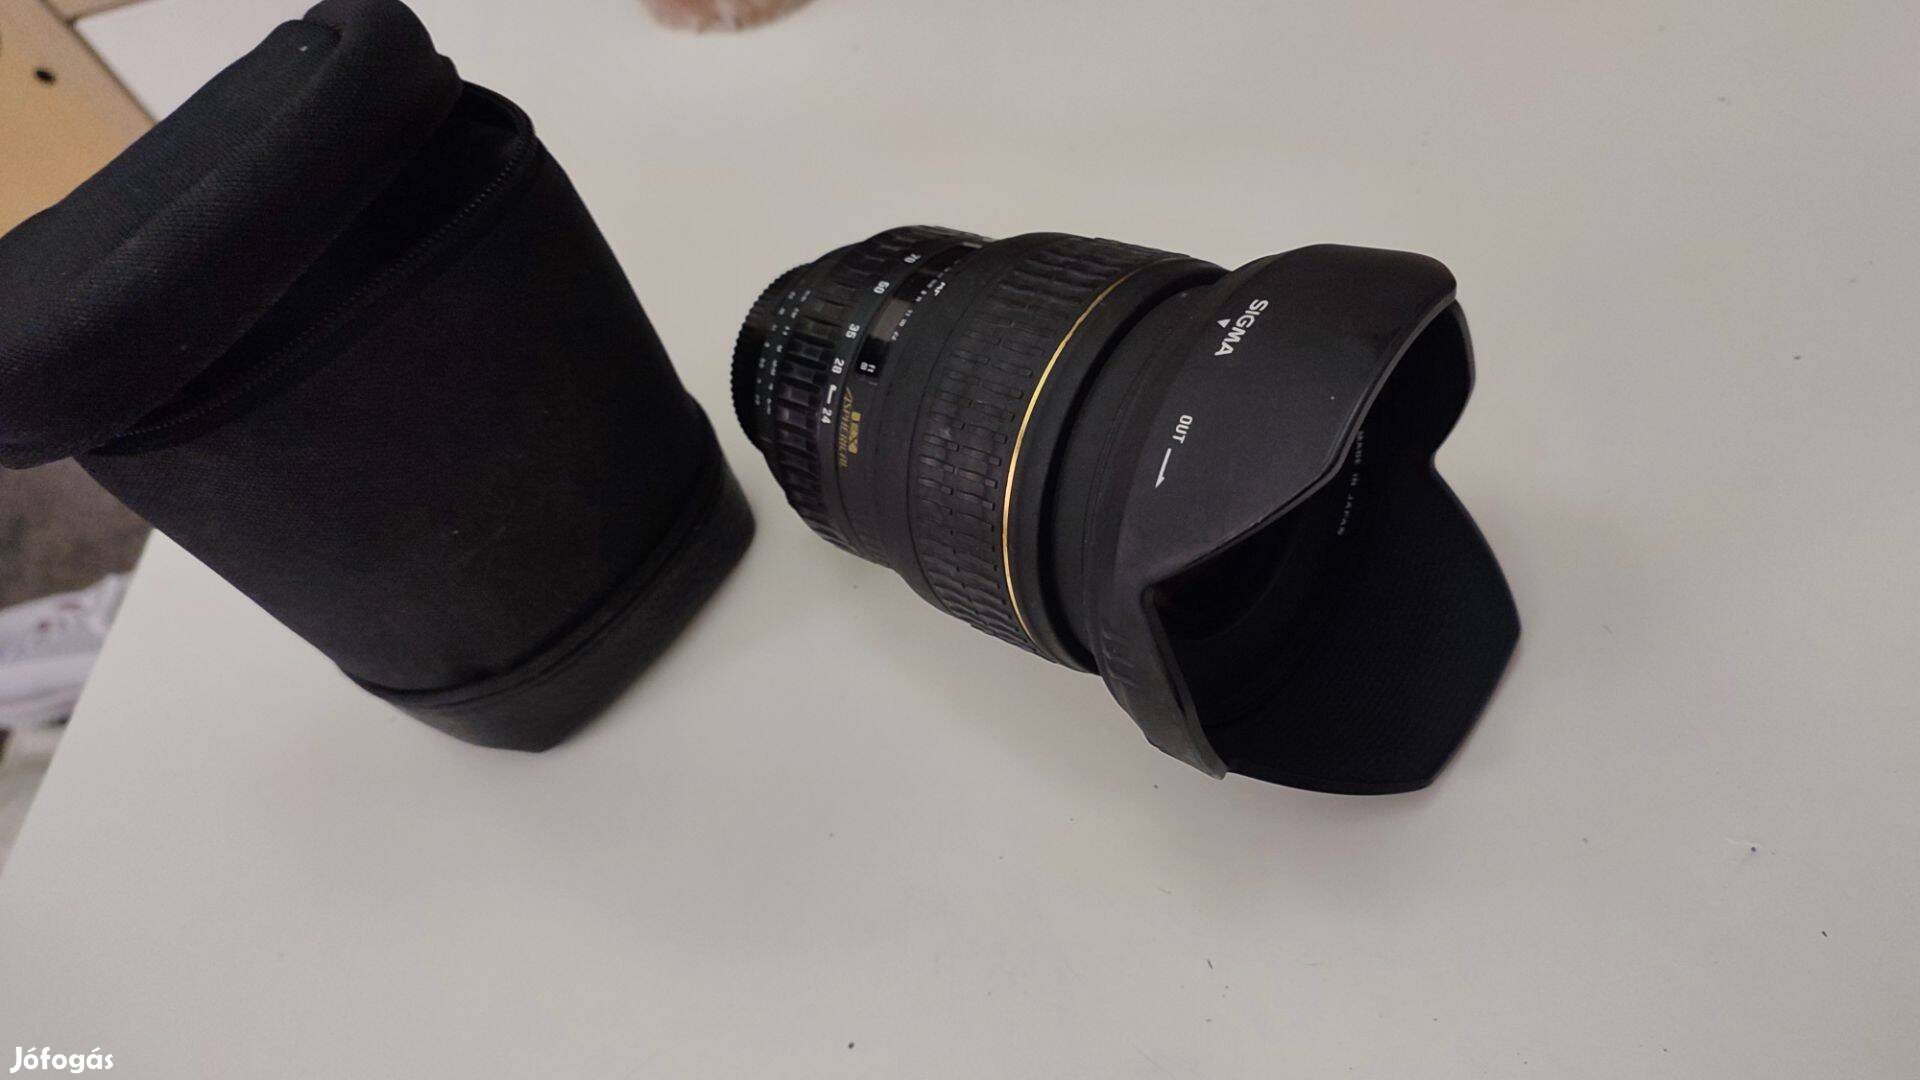 Sigma 24-70mm F2.8 EX DG Aspherical (Nikon)